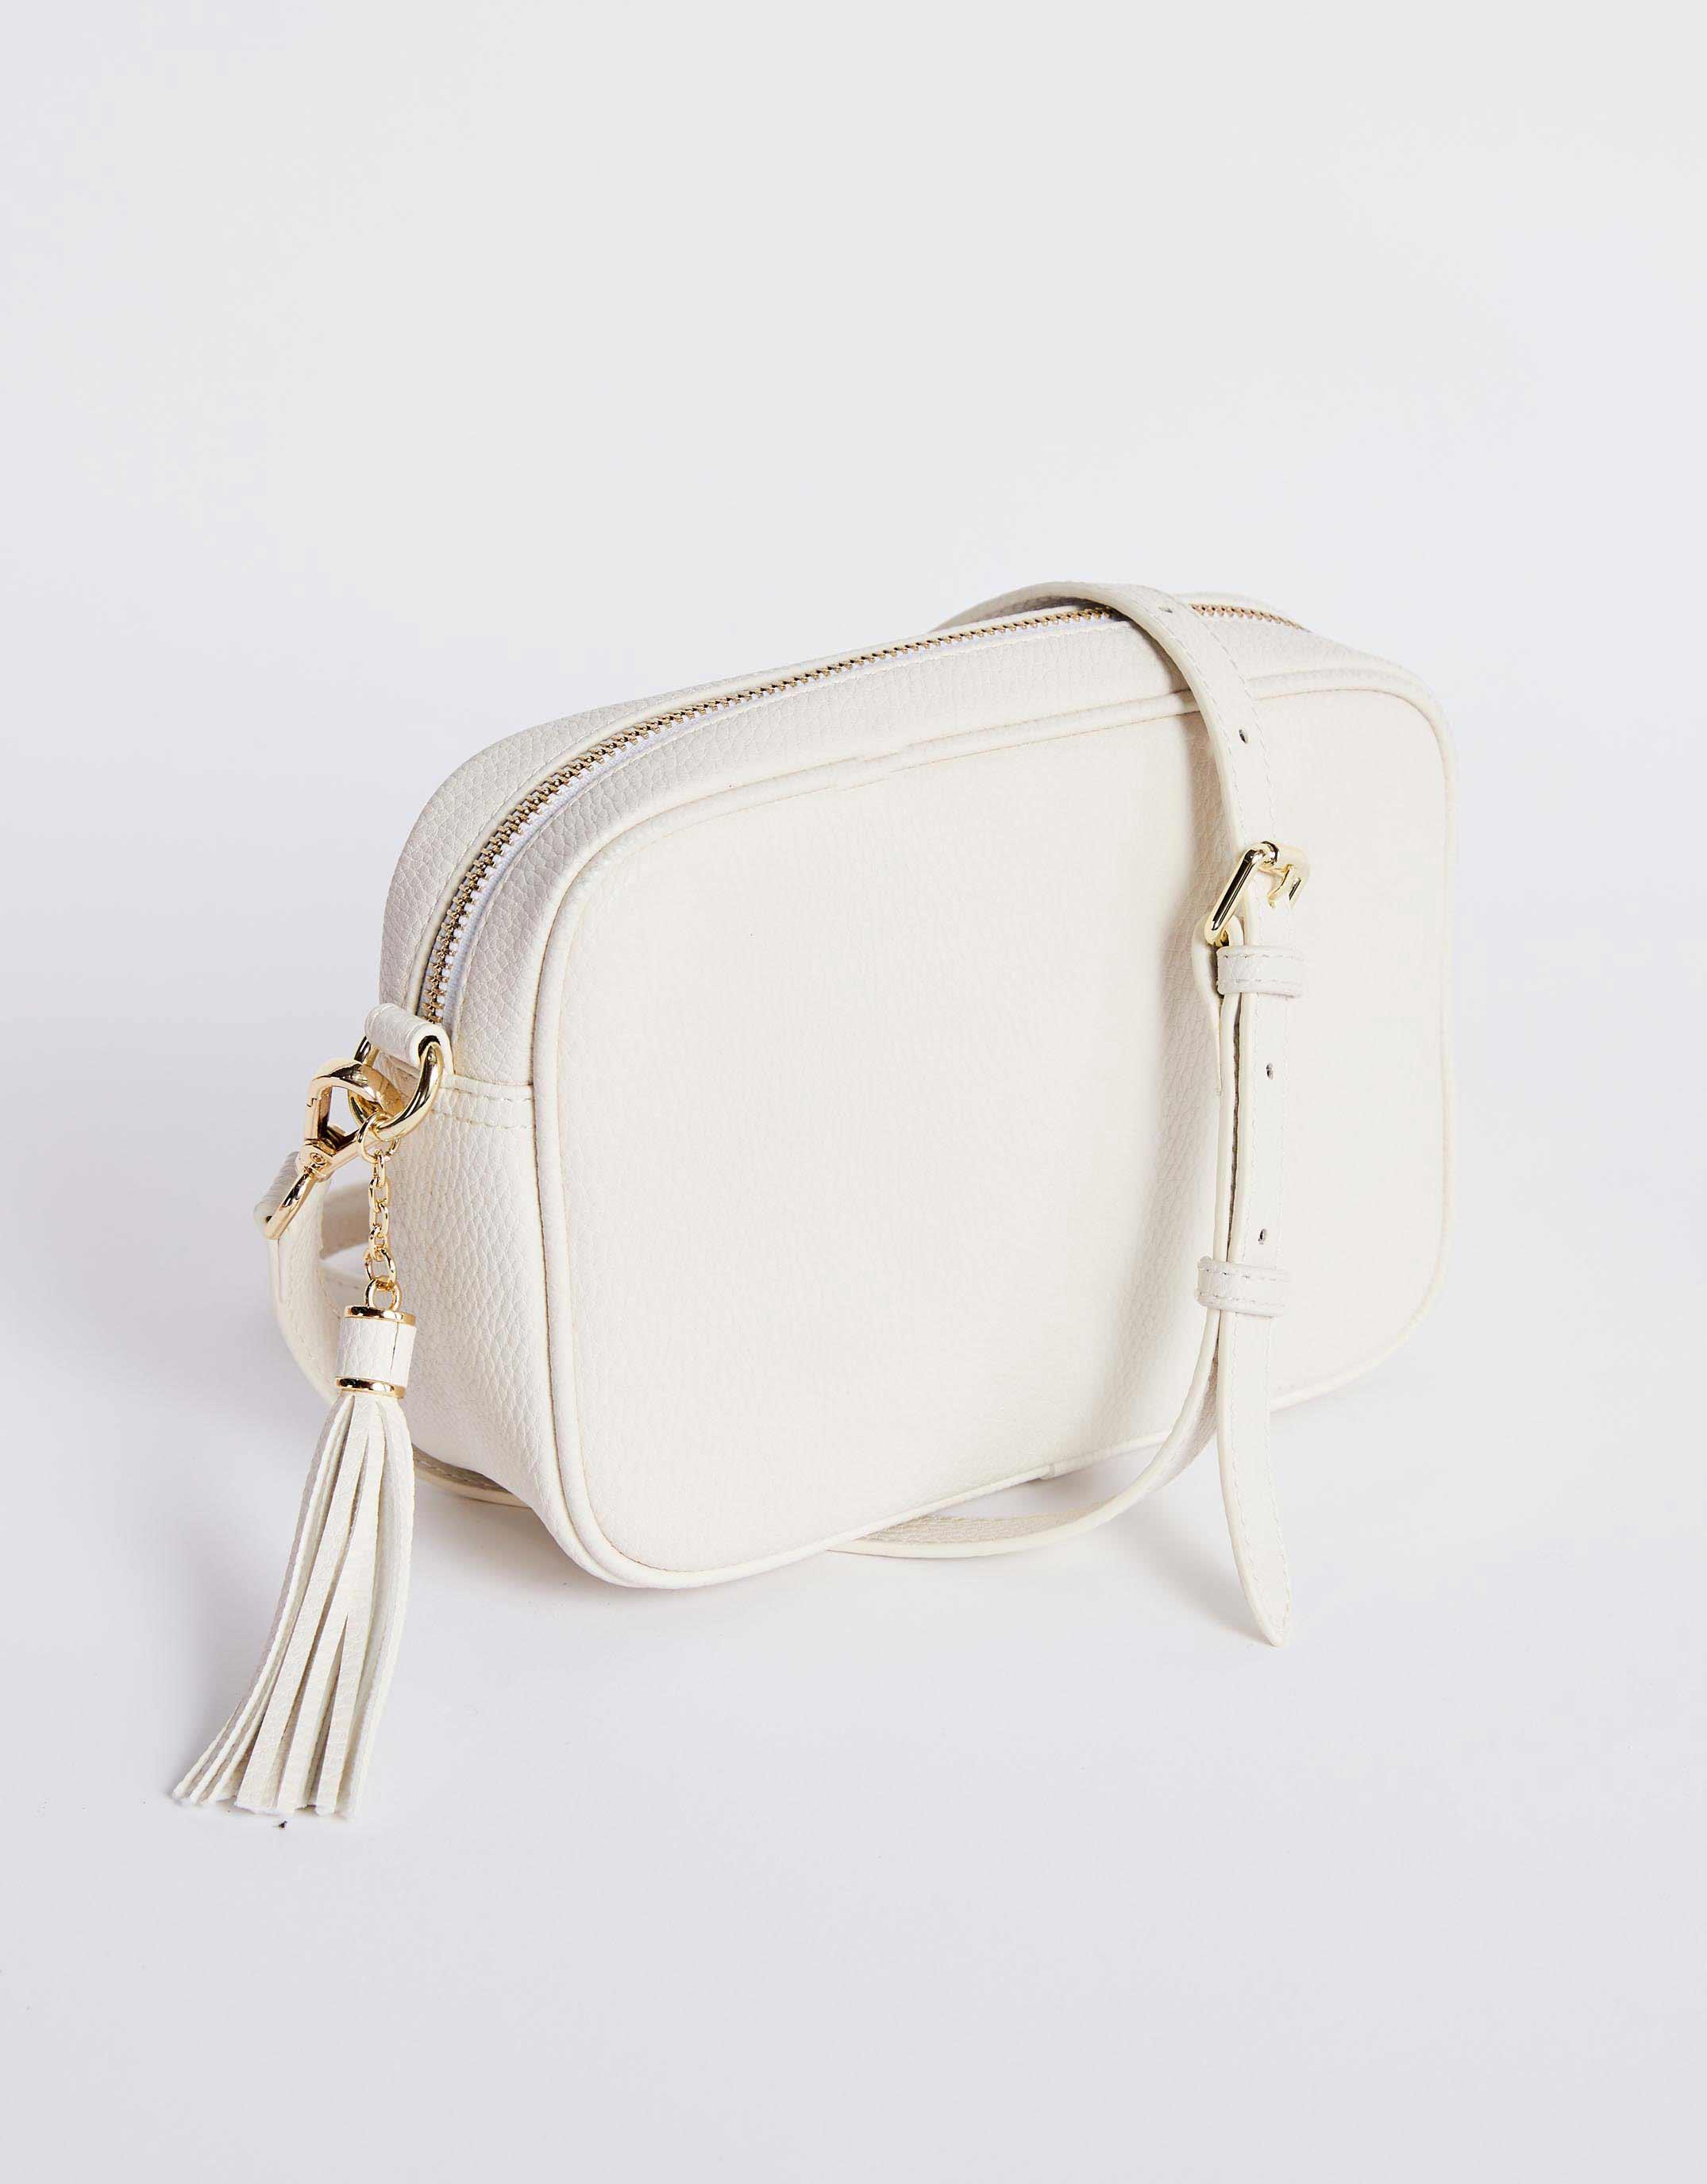 White & Co. - Zoe Crossbody Bag - Ecru/Beige Black Stripe - White & Co Living Accessories